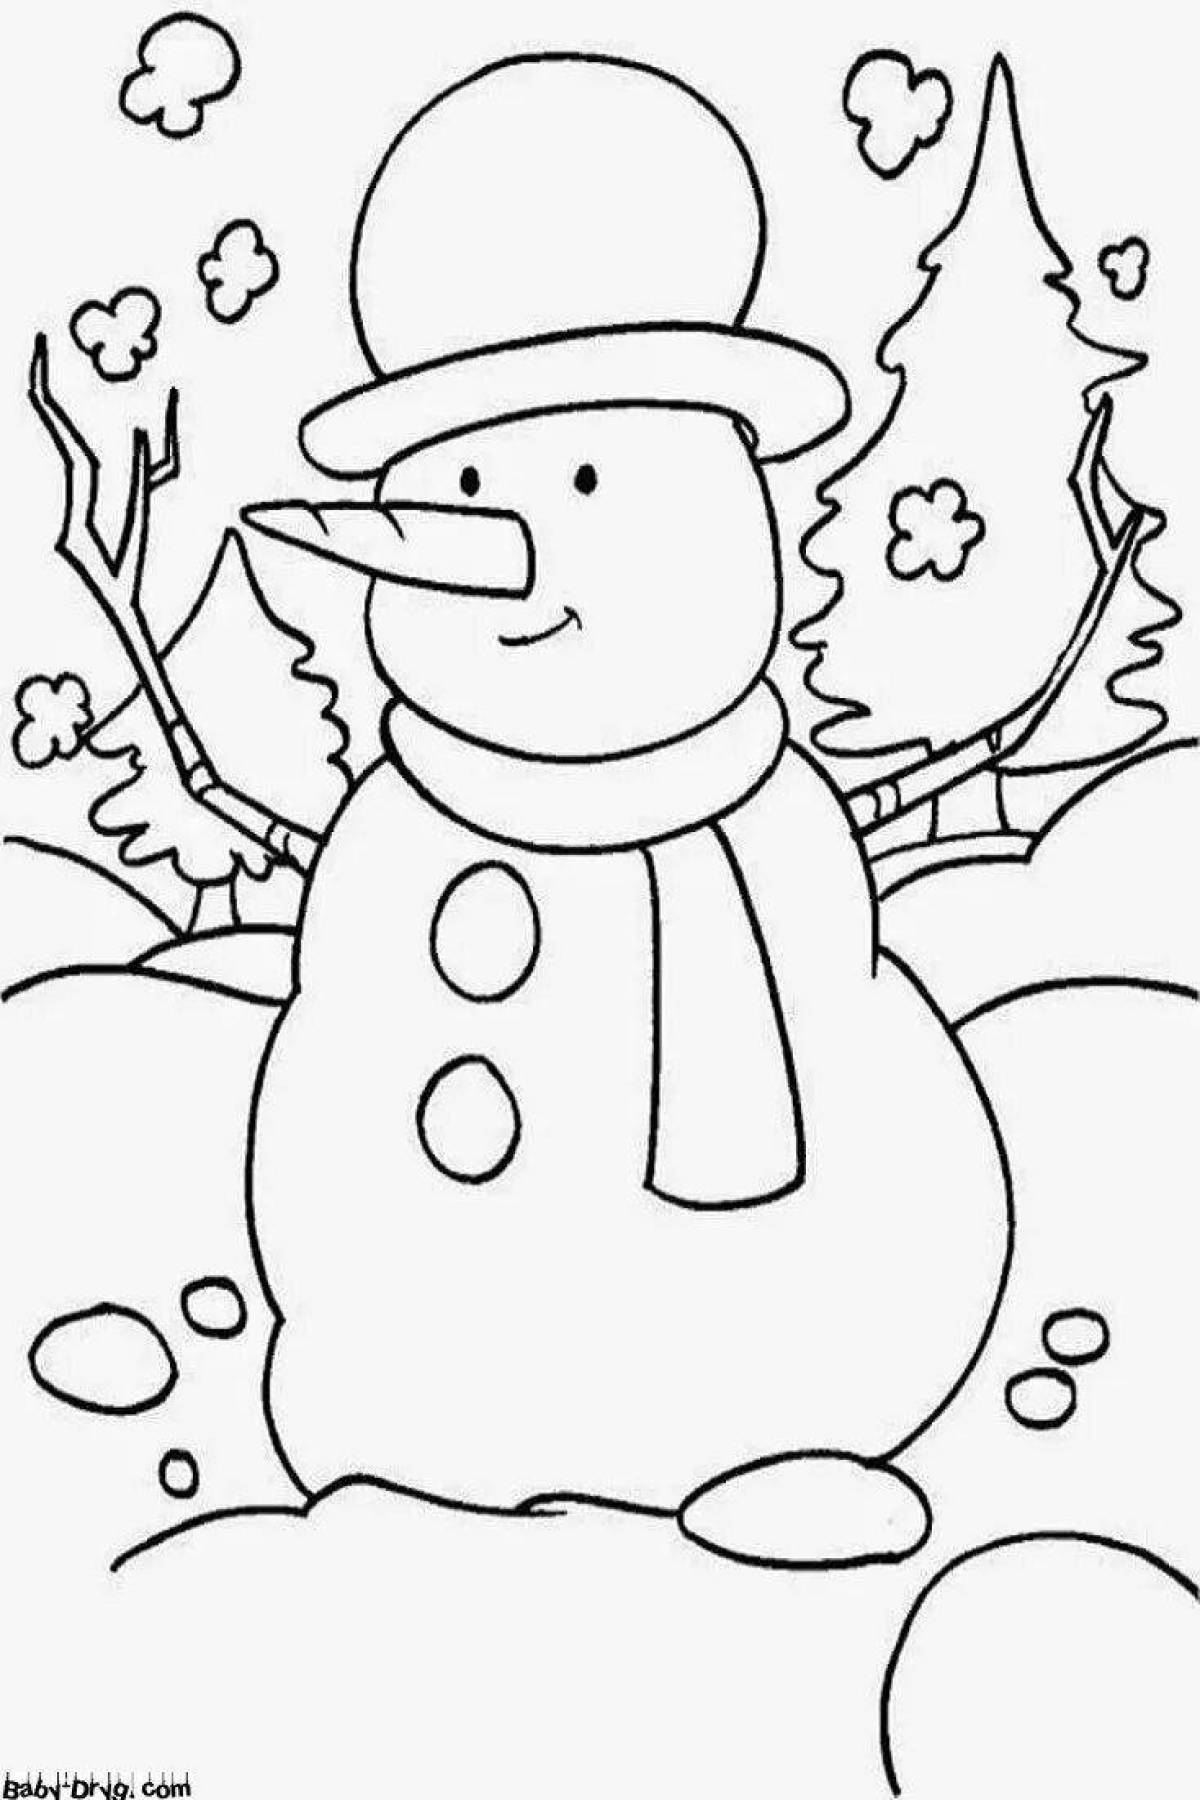 Adorable winter coloring book